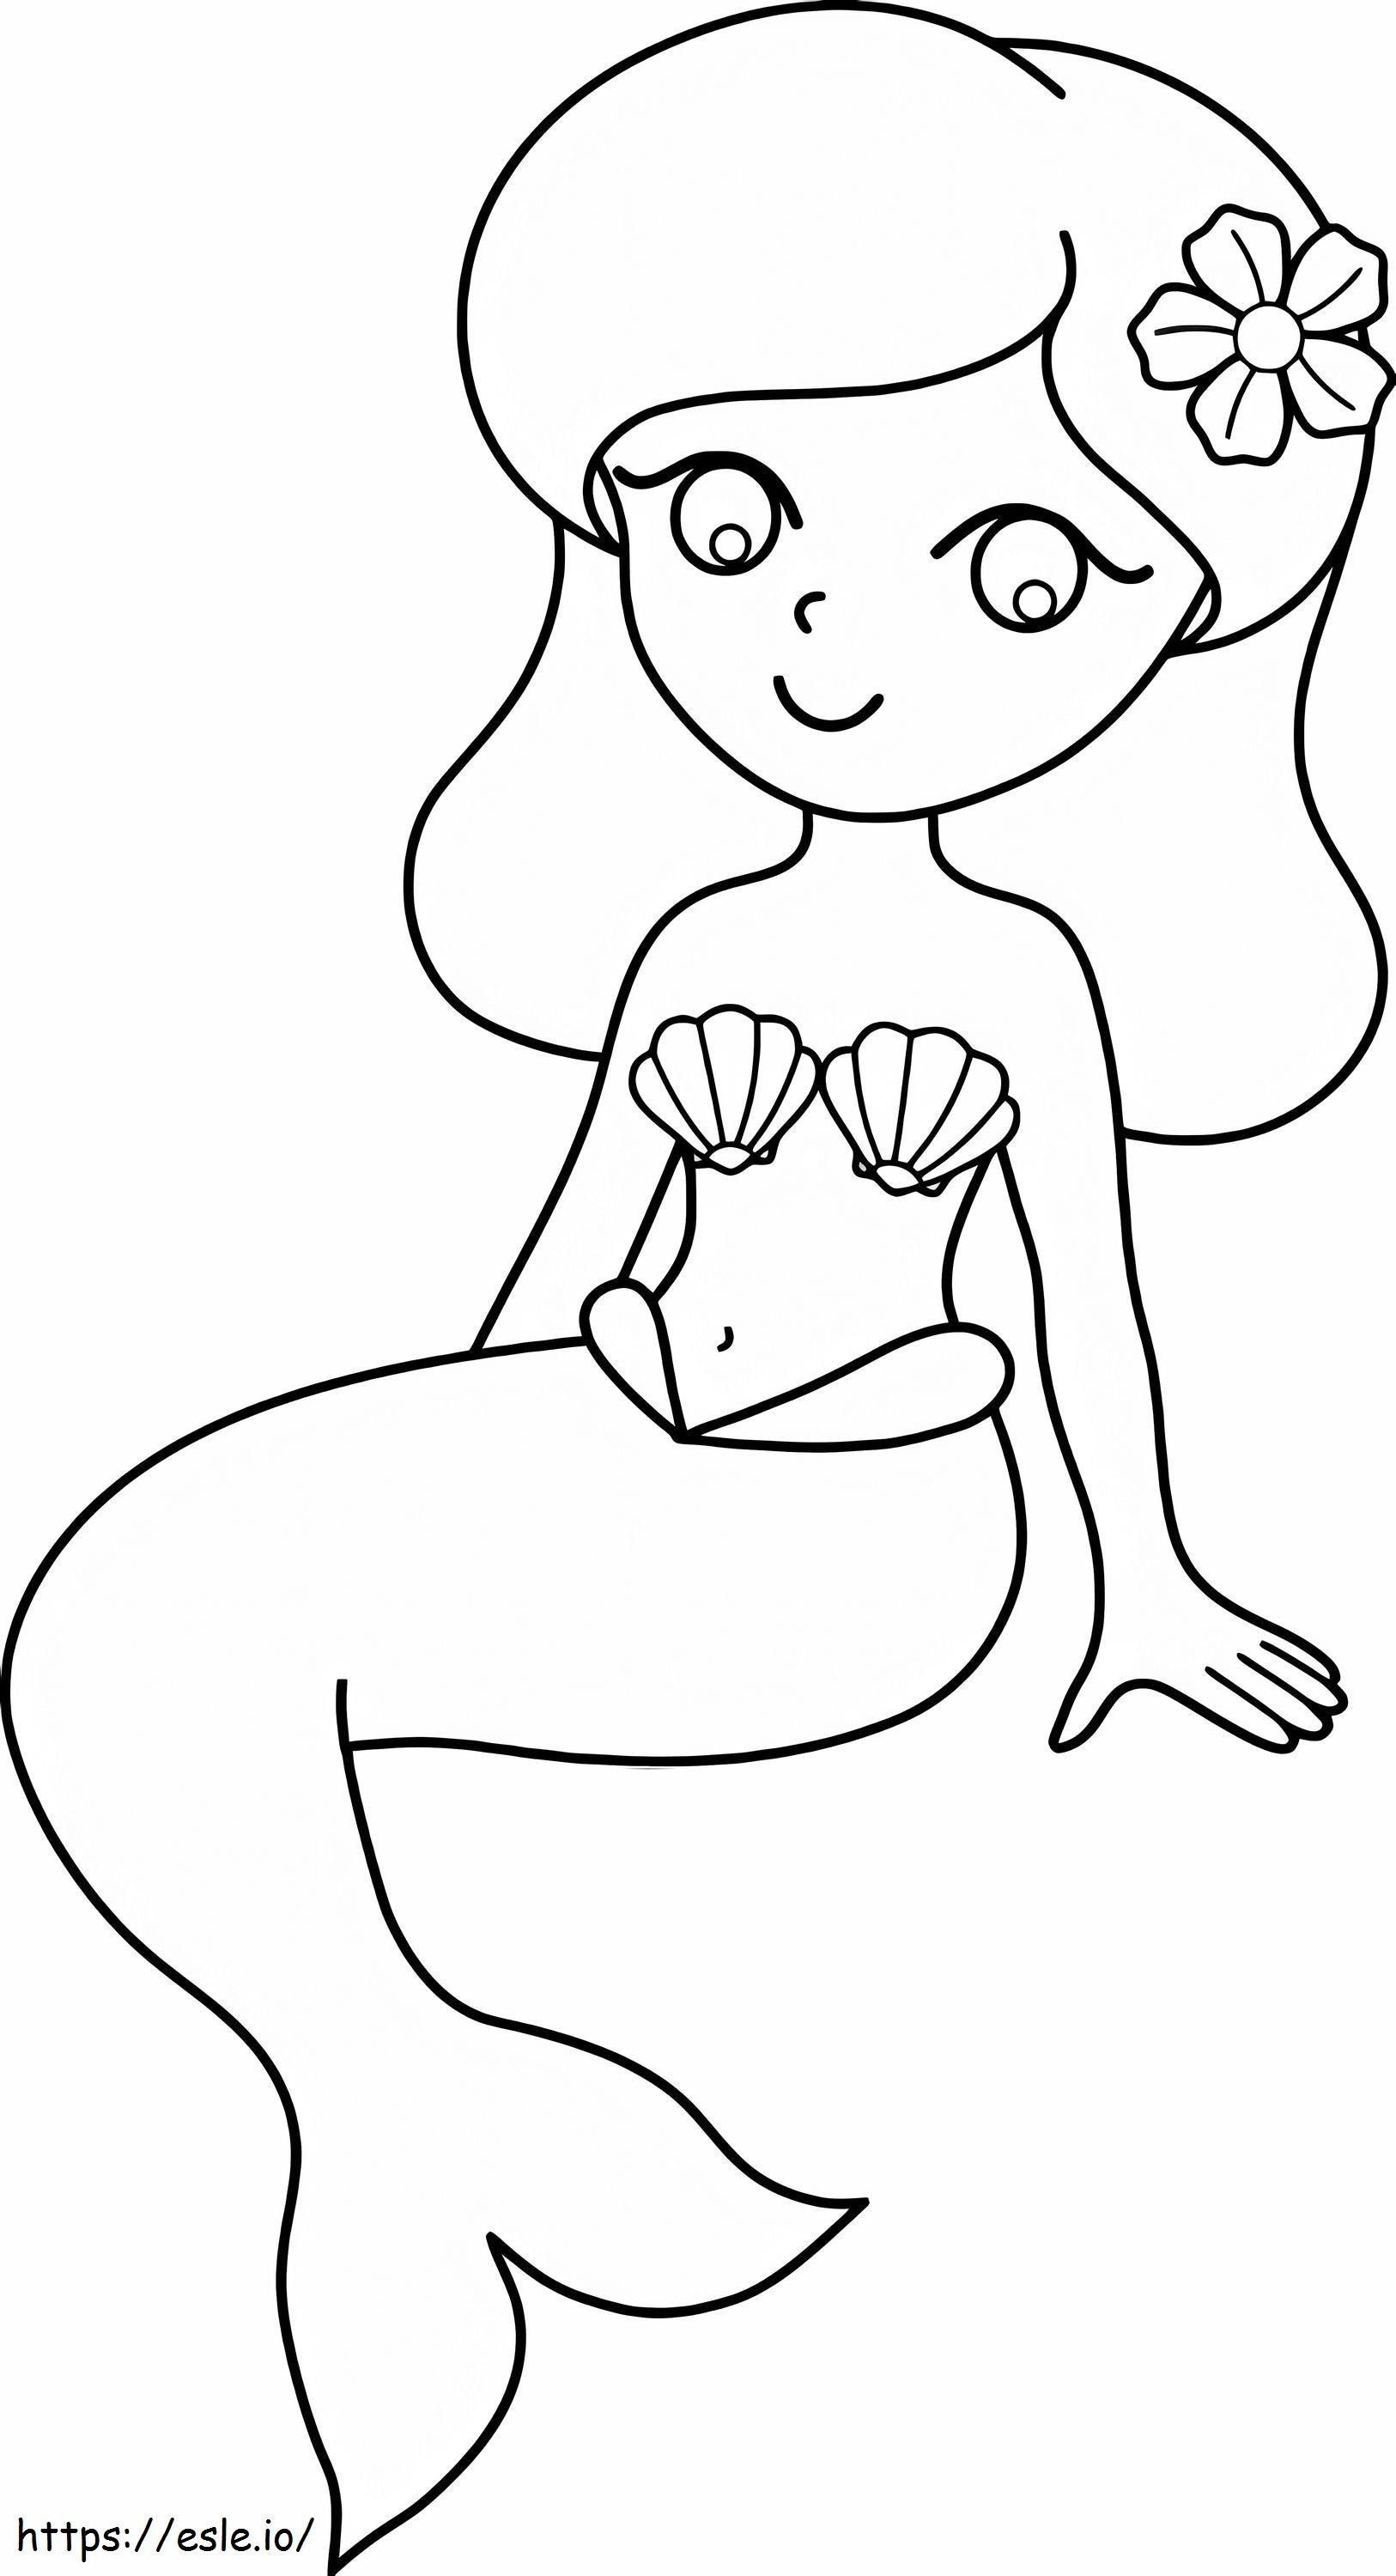 Easy Mermaid coloring page